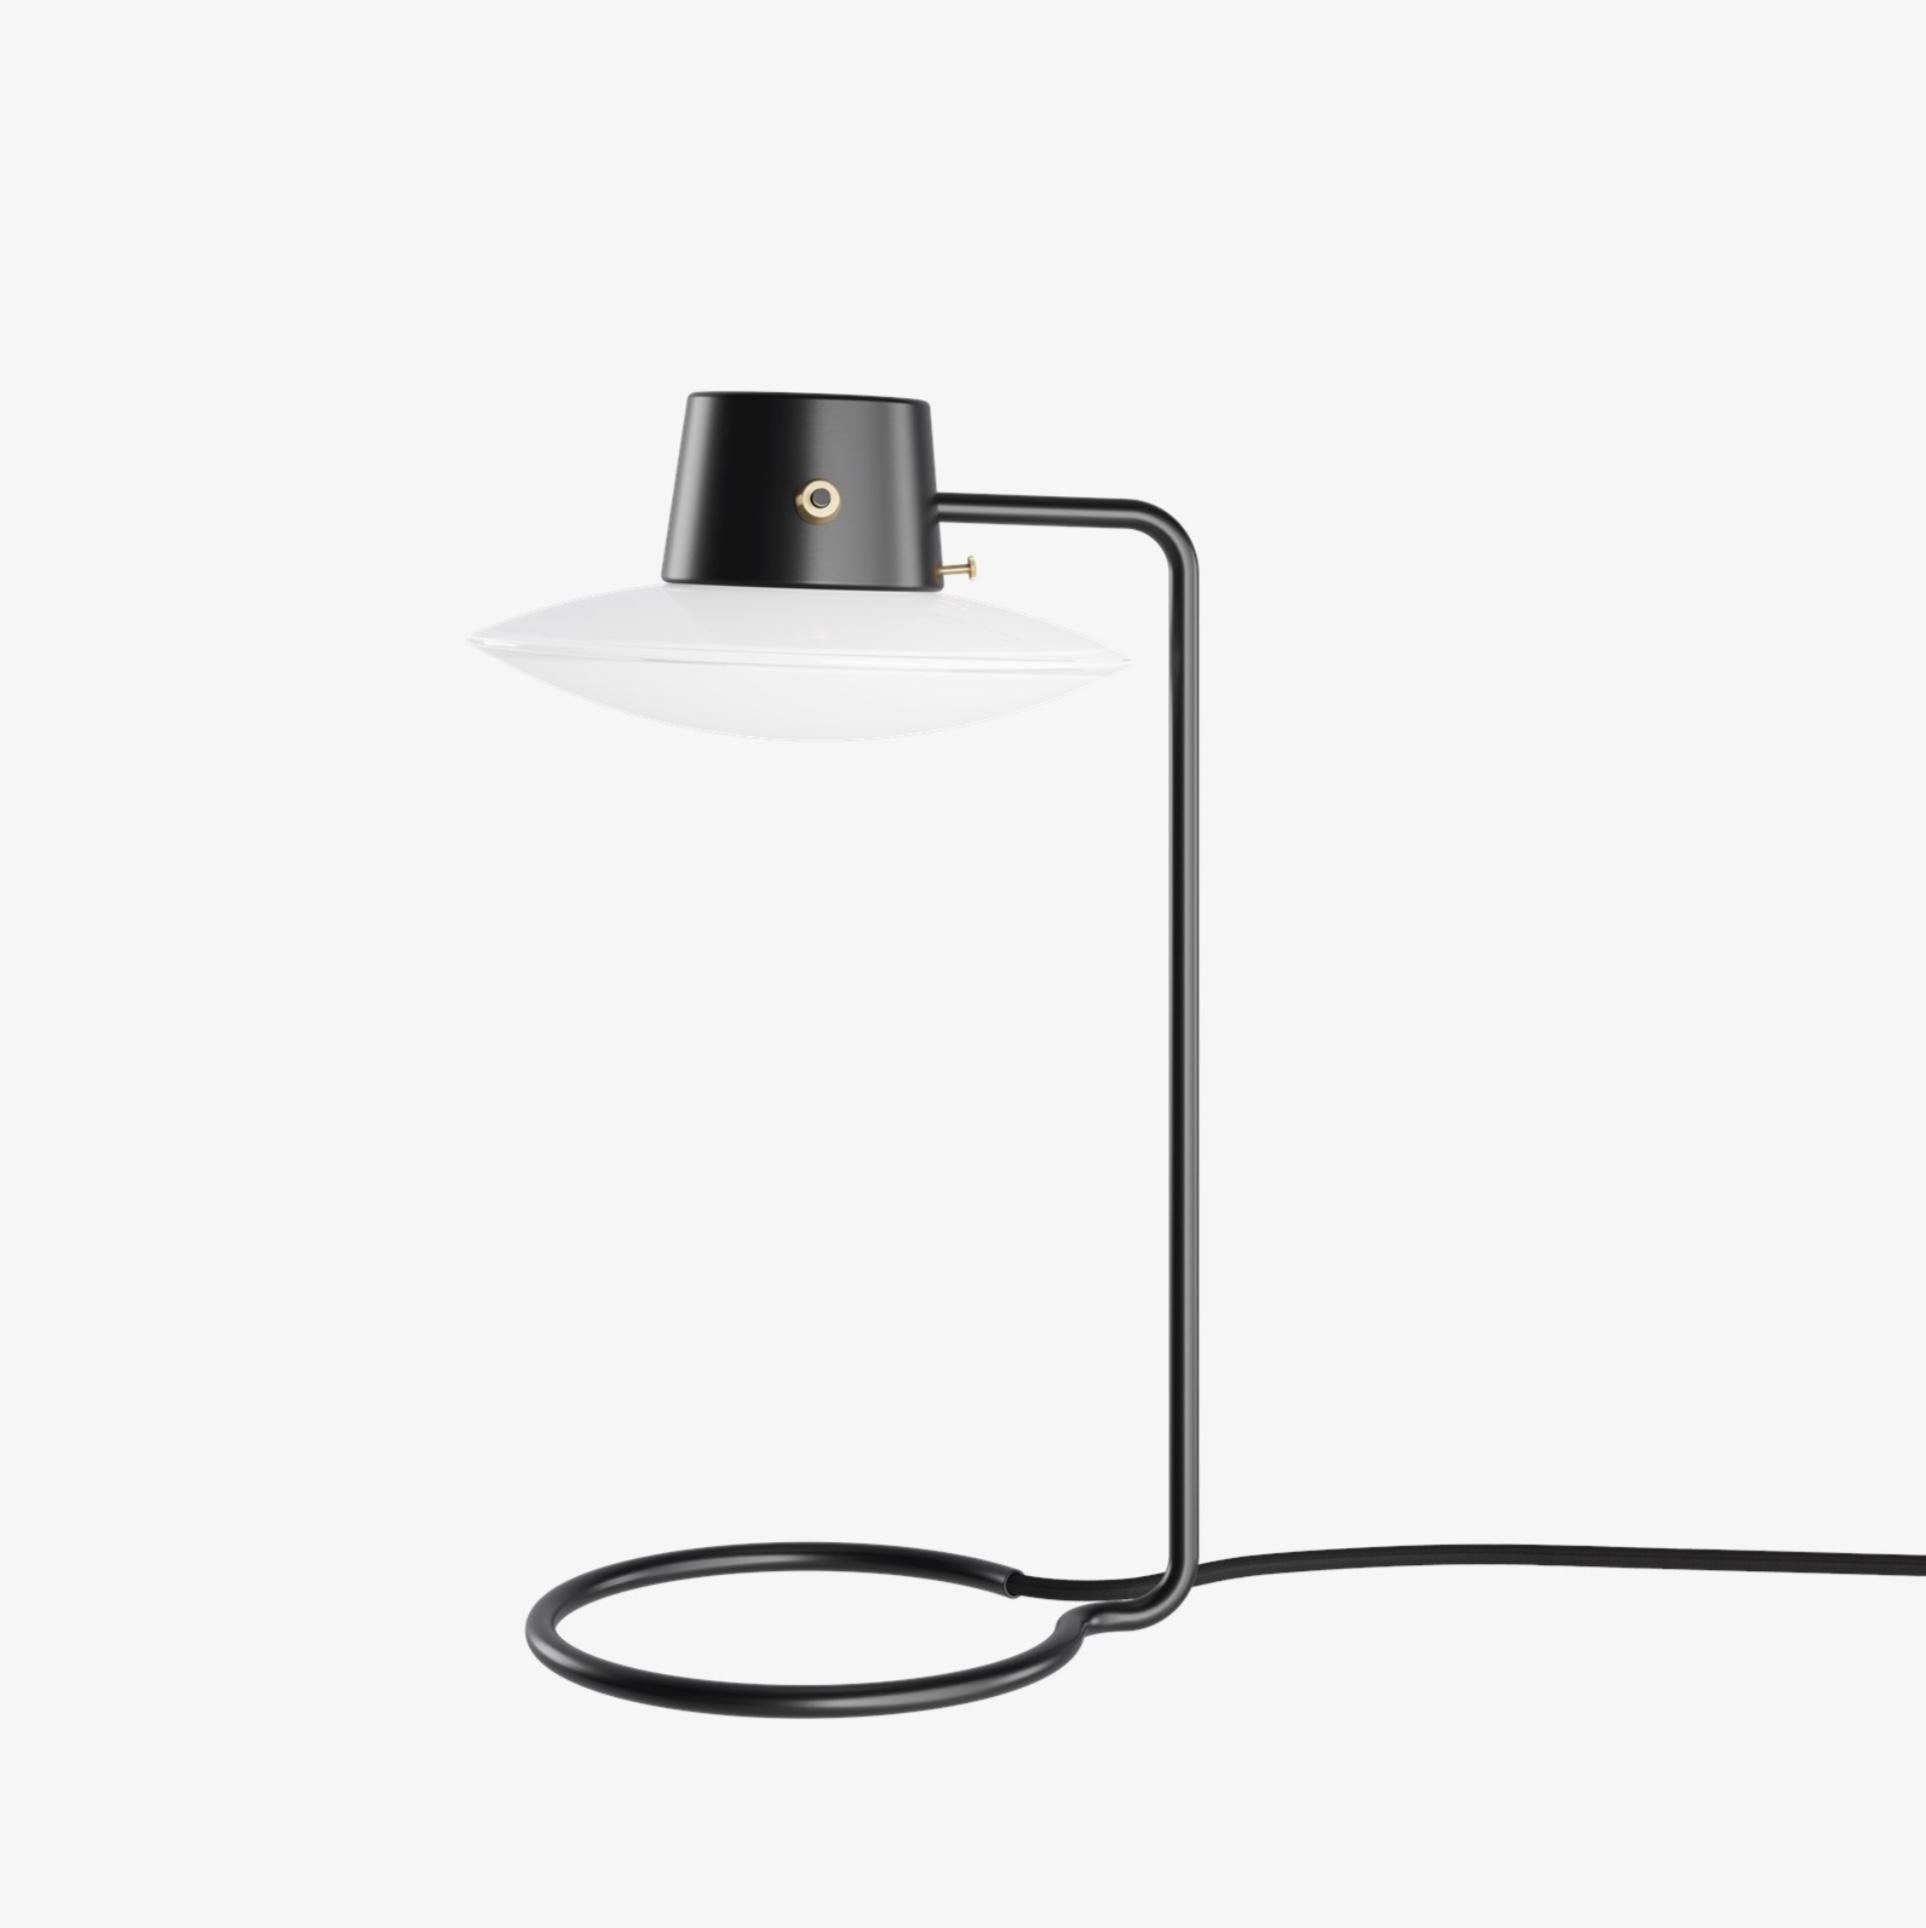 Arne Jacobsen AJ Oxford Pin Table Lamp in Opaline Glass for Louis Poulsen 1963 For Sale 1